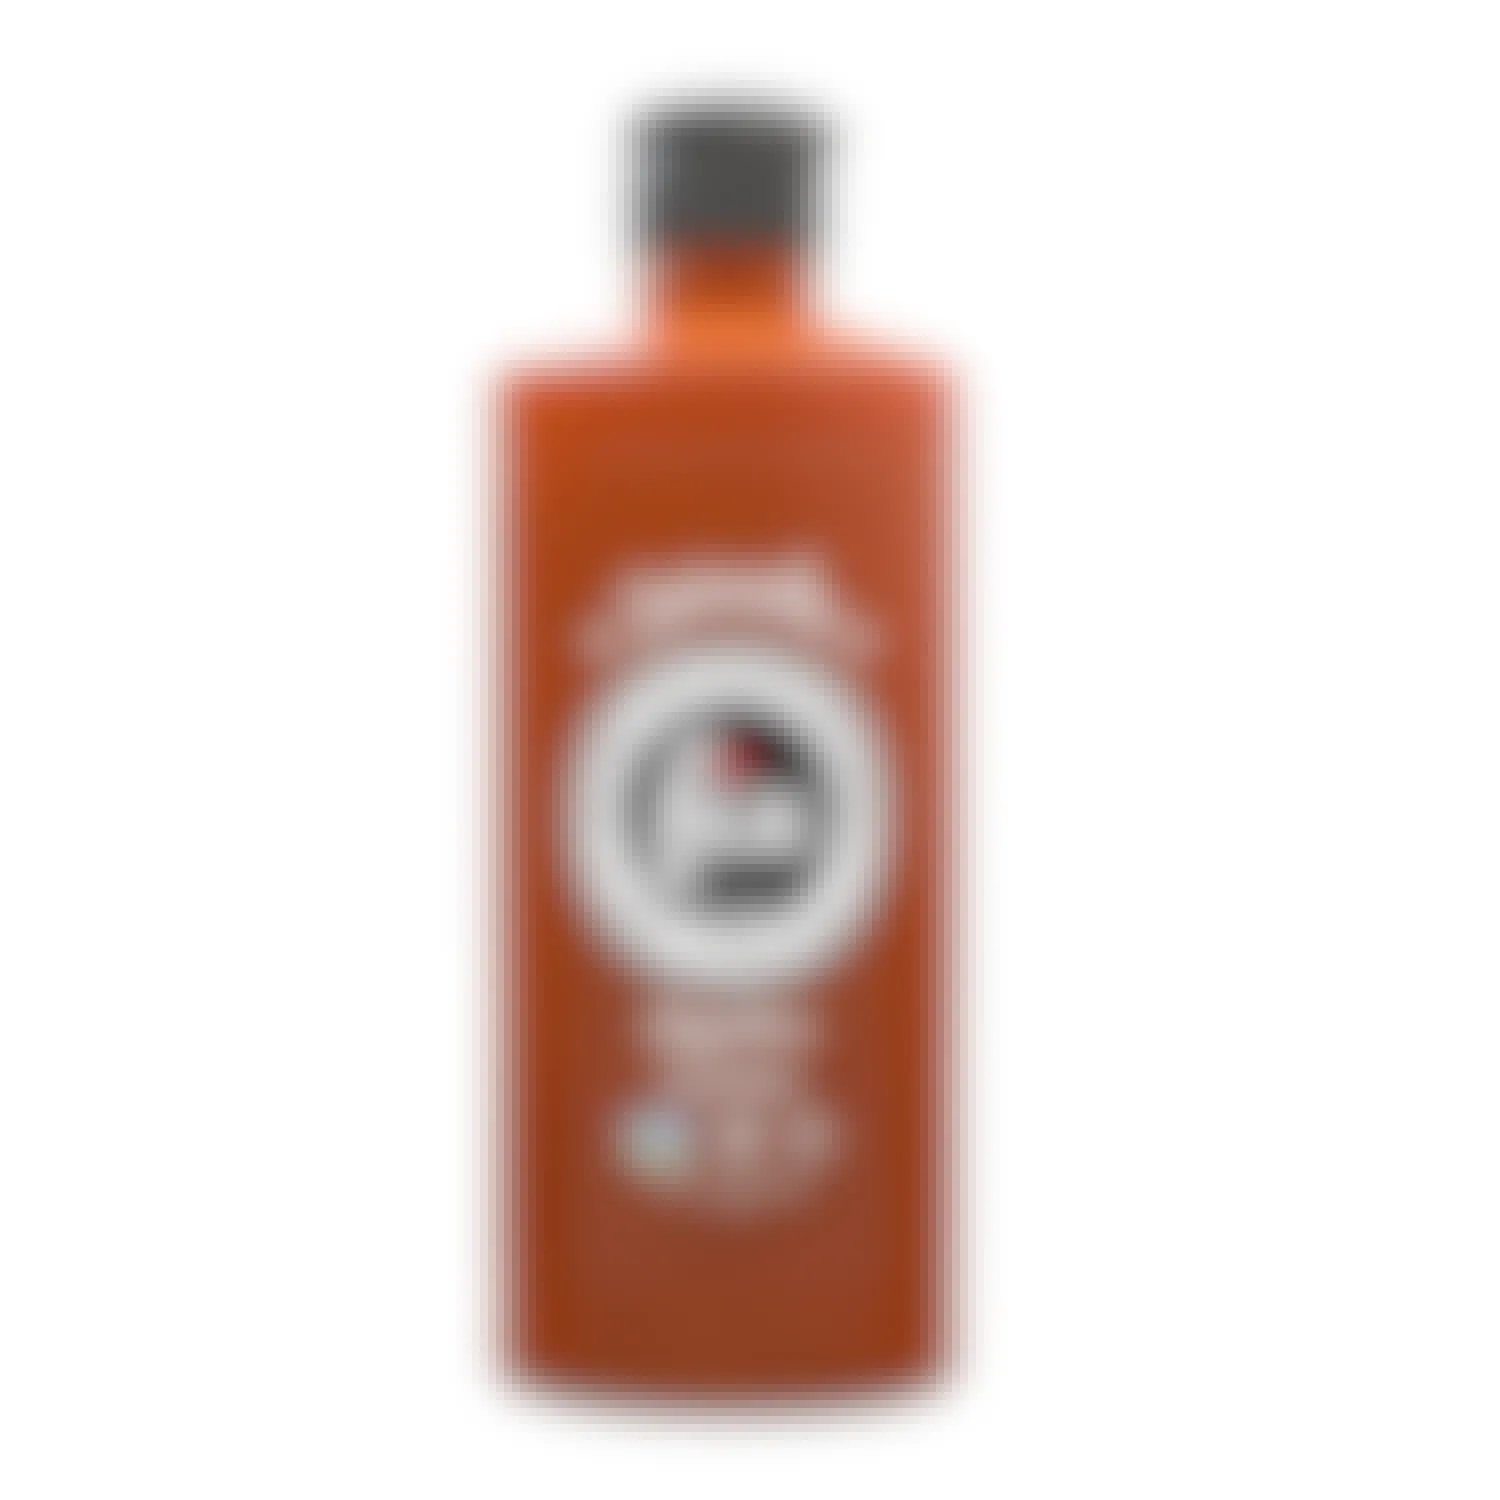 A stock image of a bottle of Fix brand sriracha hot sauce.